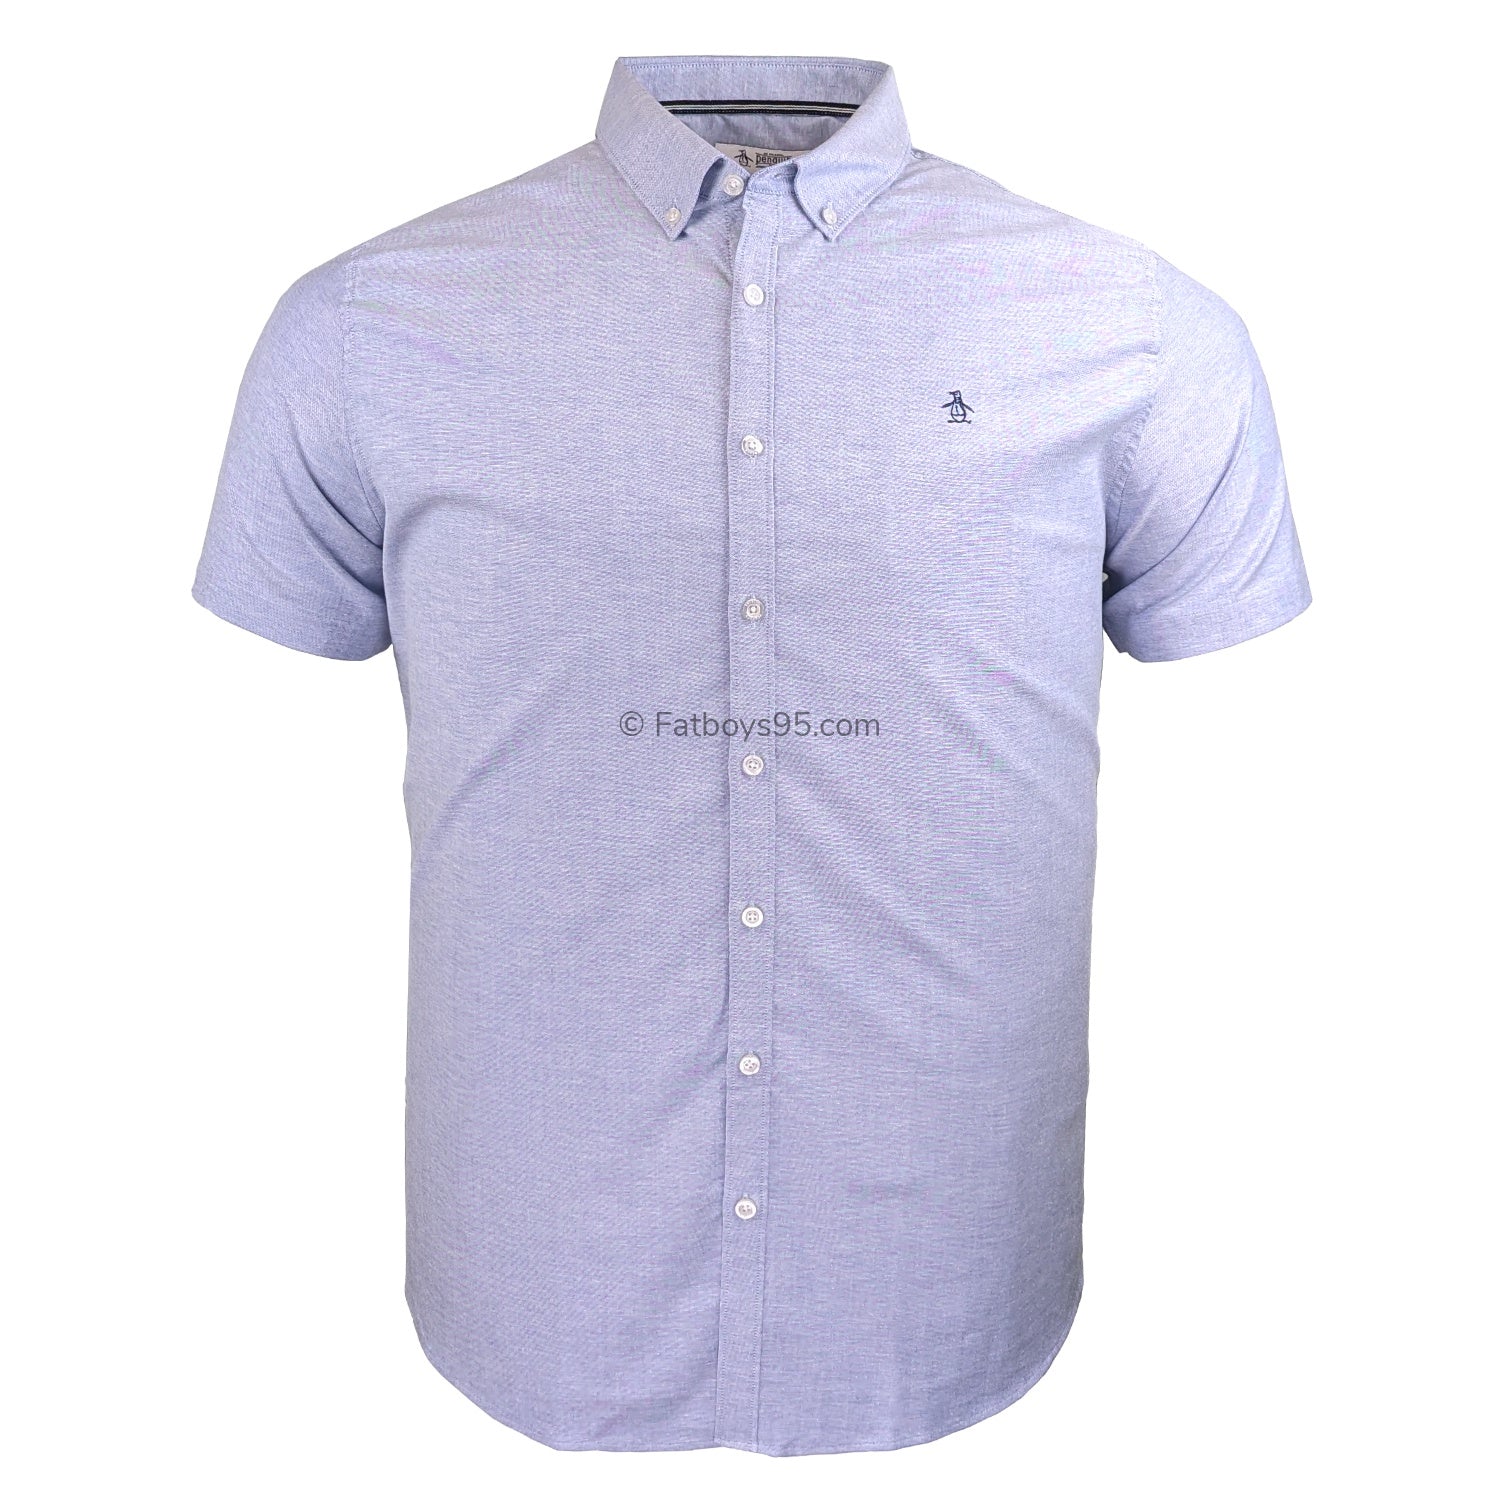 Penguin Oxford S/S Shirt - OJWB0037 - Amparo Blue 1